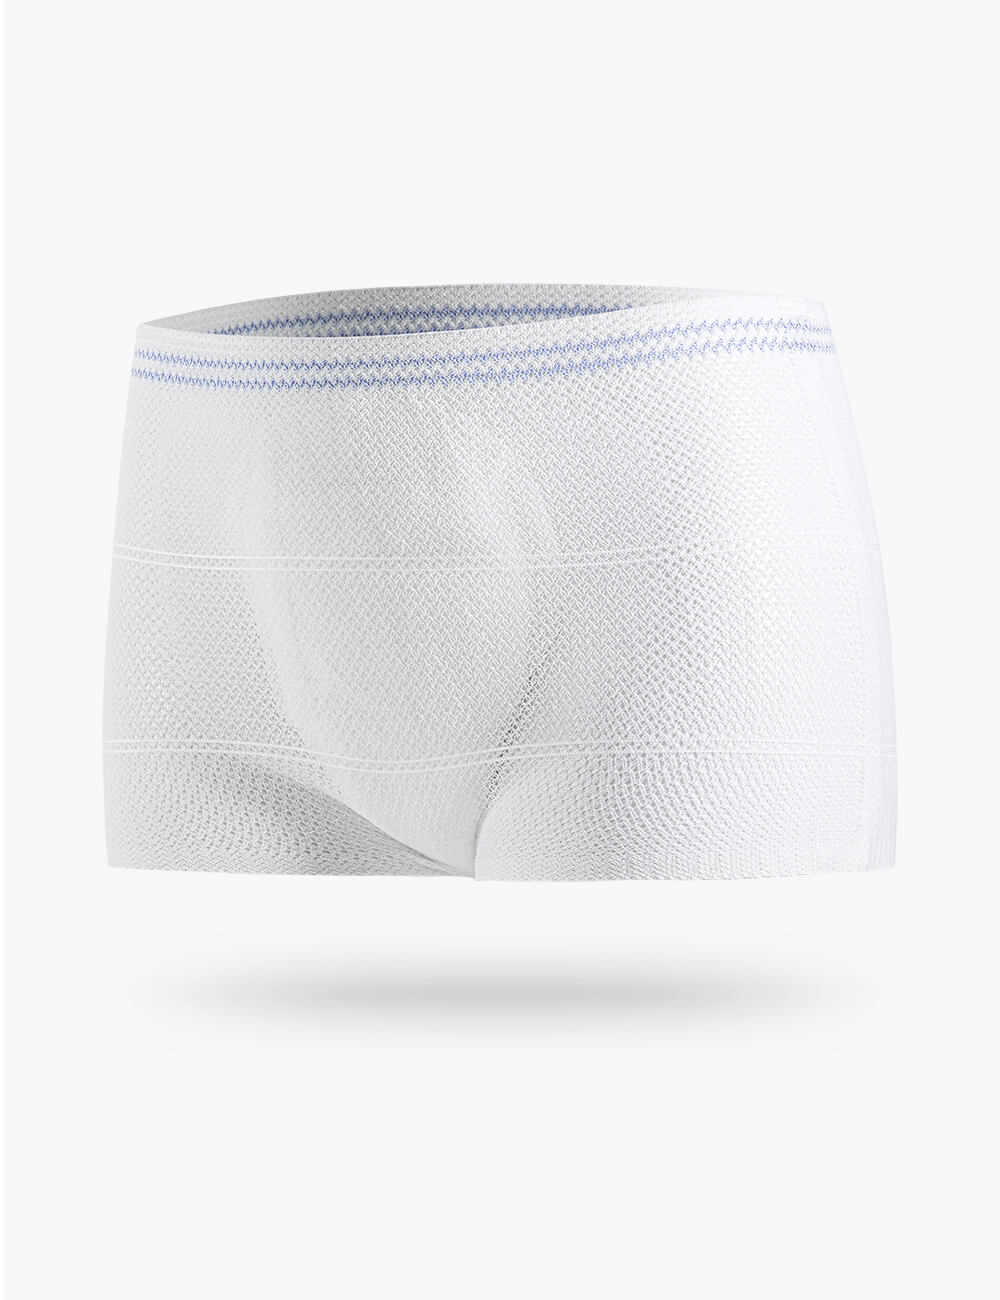 CARER SPARK Mesh Underwear Postpartum 10 pack Disposable Mesh